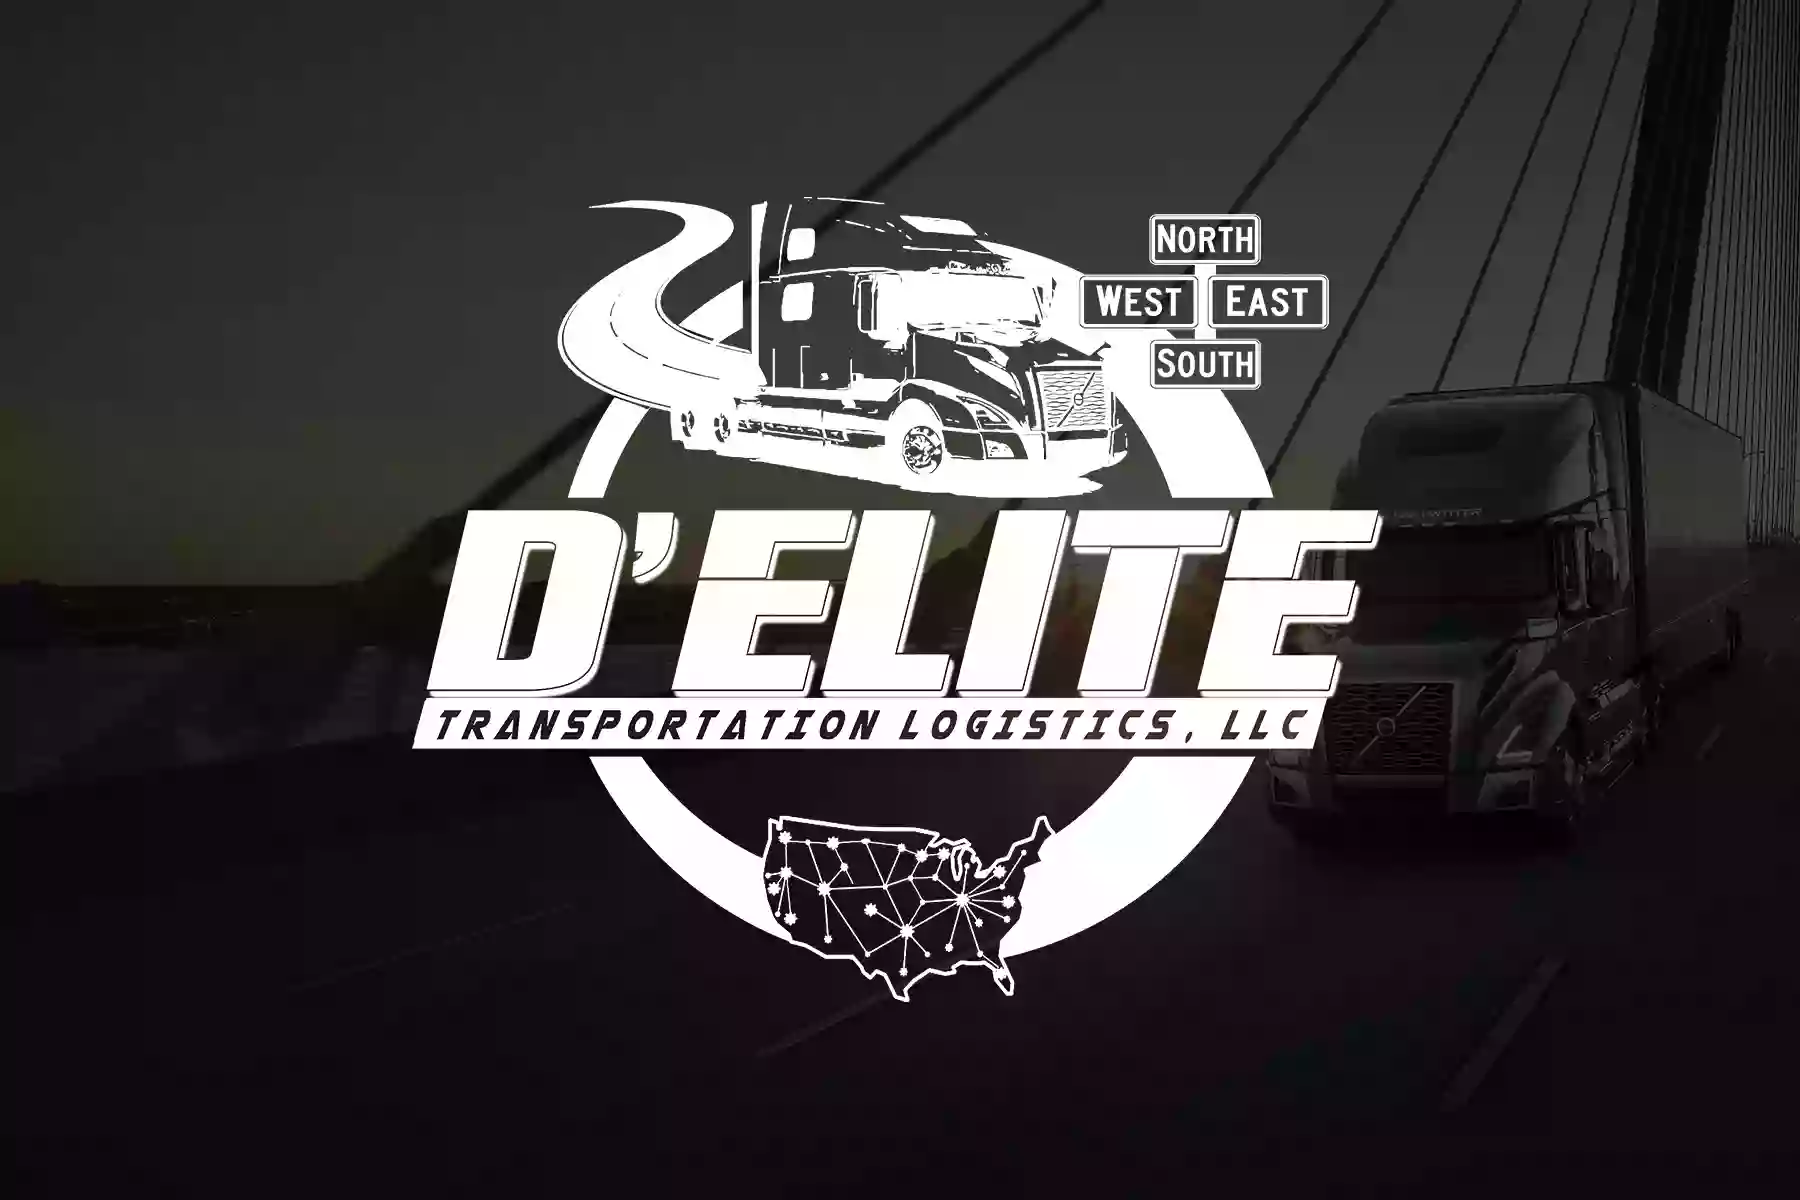 D' Elite Transportation Logistics, LLC